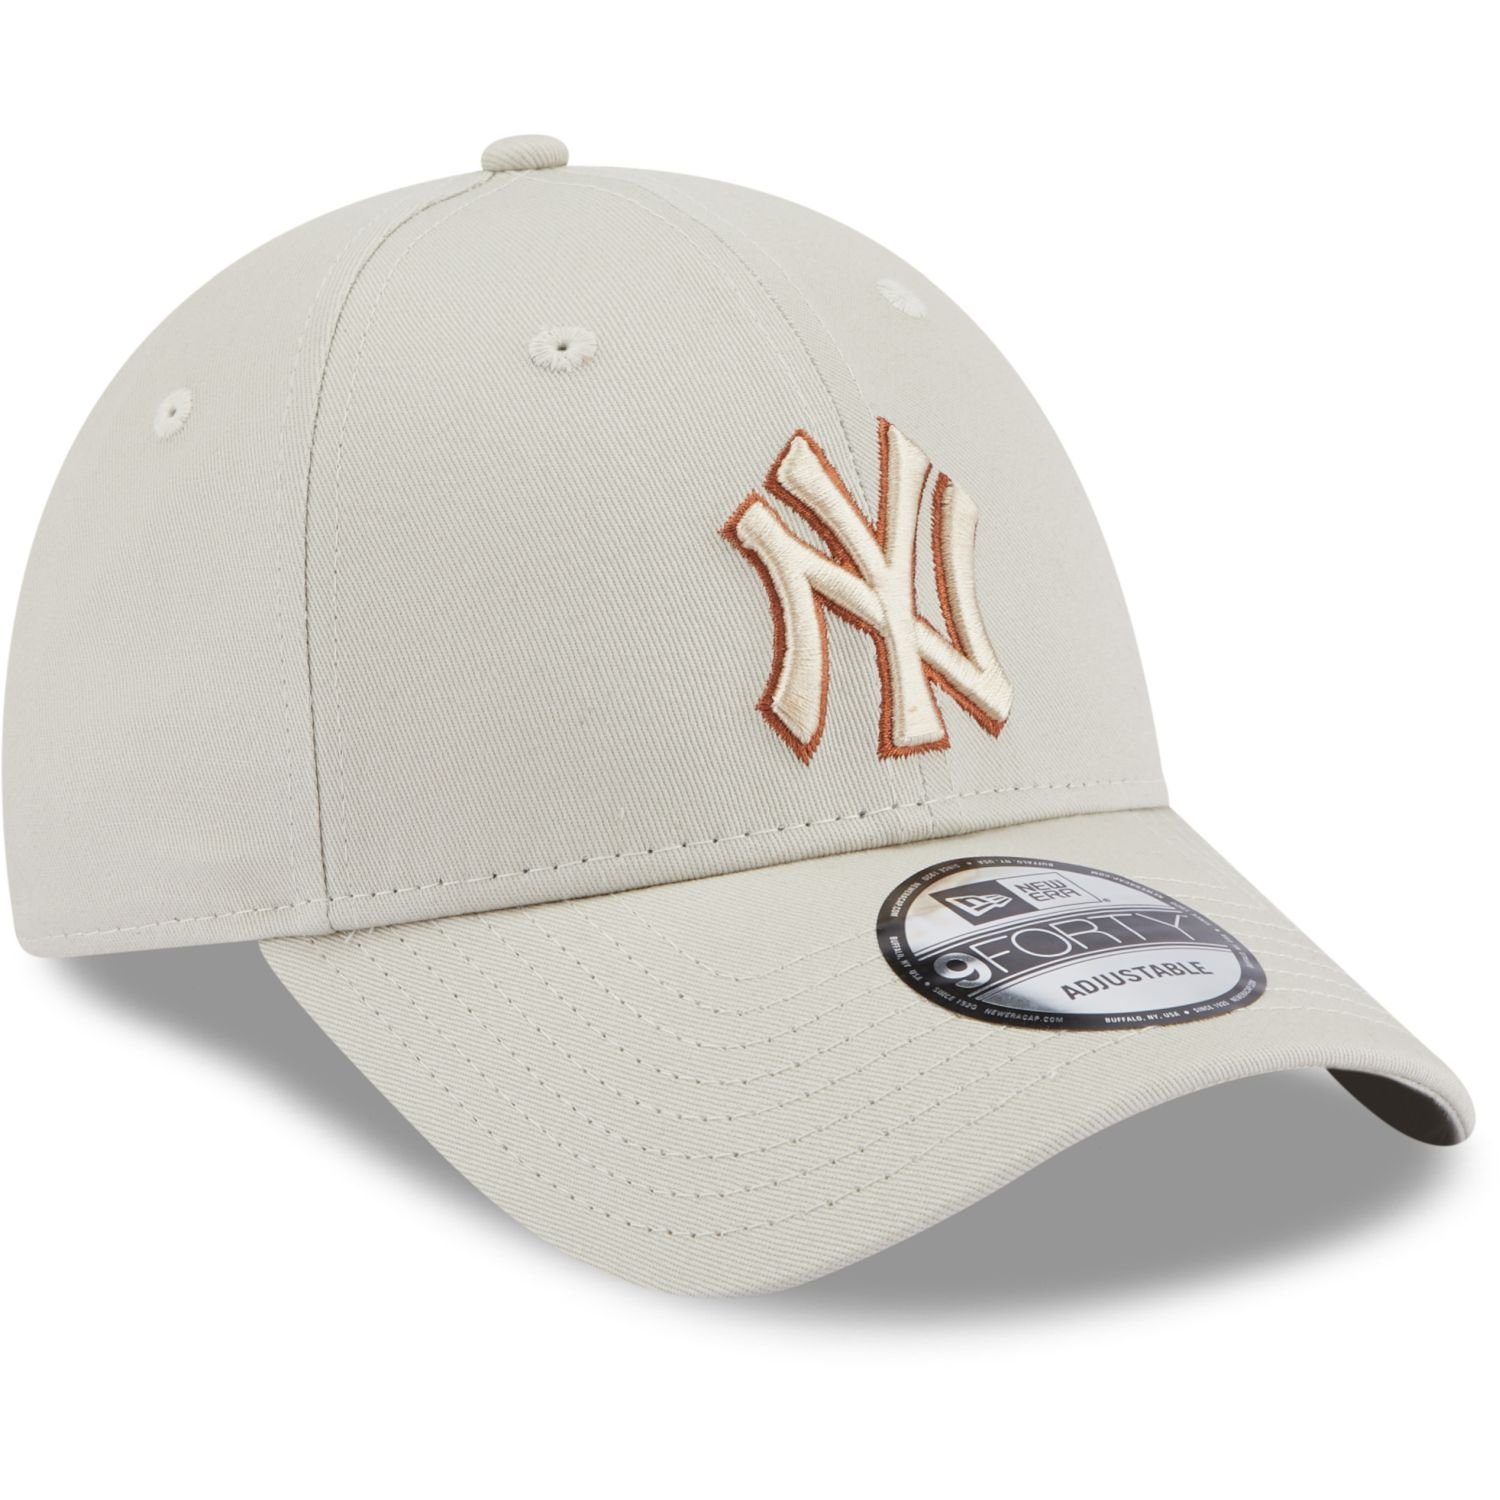 Cap New Strapback 9Forty Era beige New Yankees York OUTLINE Baseball